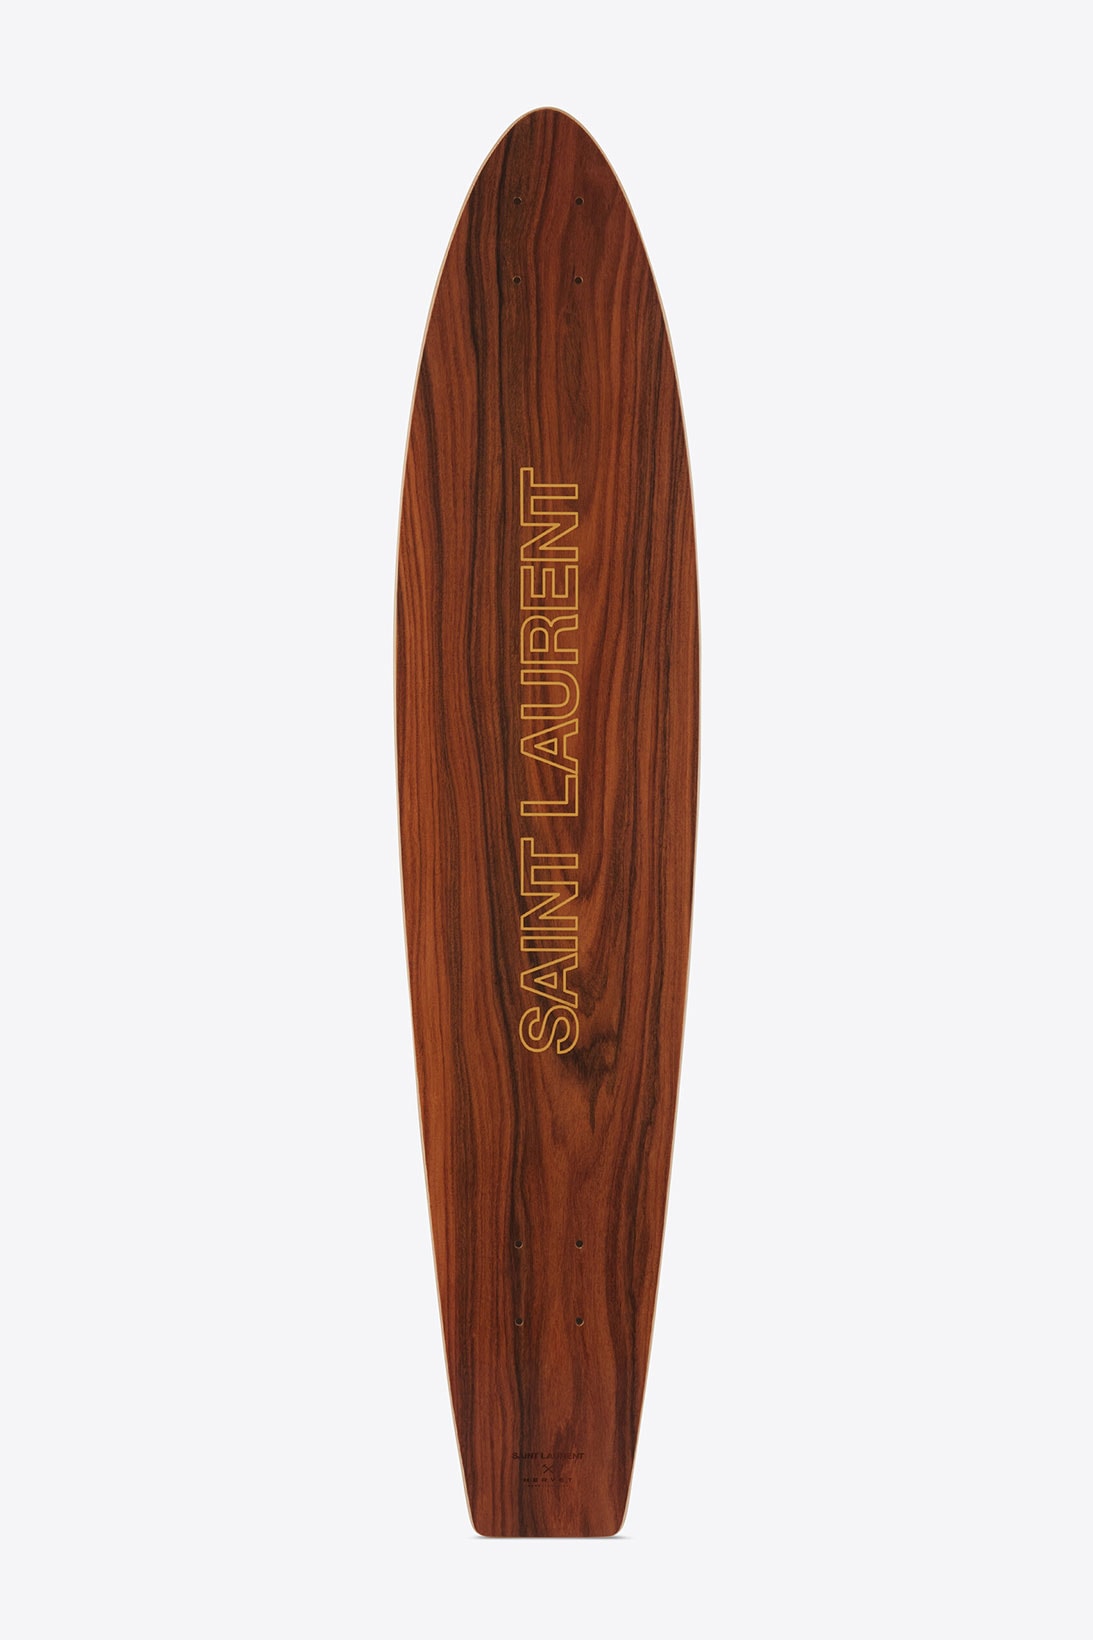 Saint Laurent Rive Droite Hervet Manufacturier Coffee Table Surfboards RElease Info